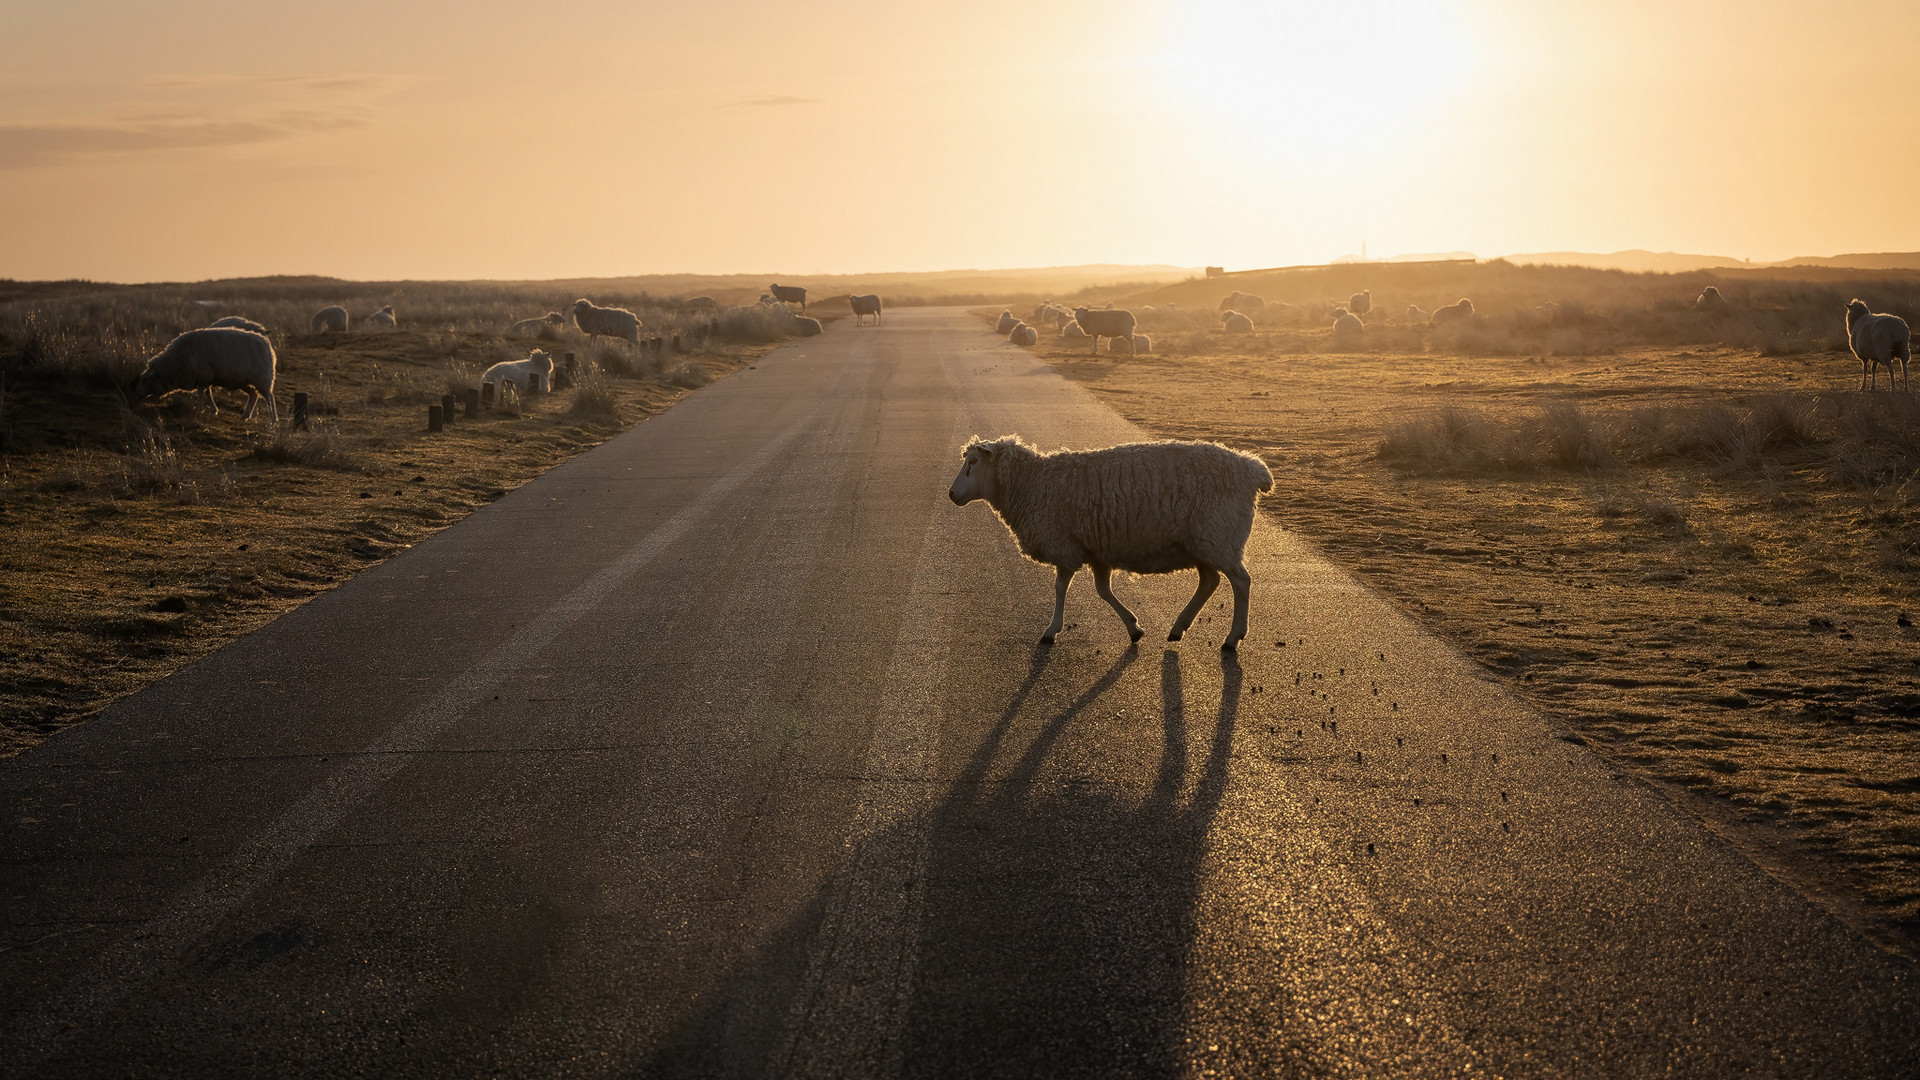 ...sheeps crossing...